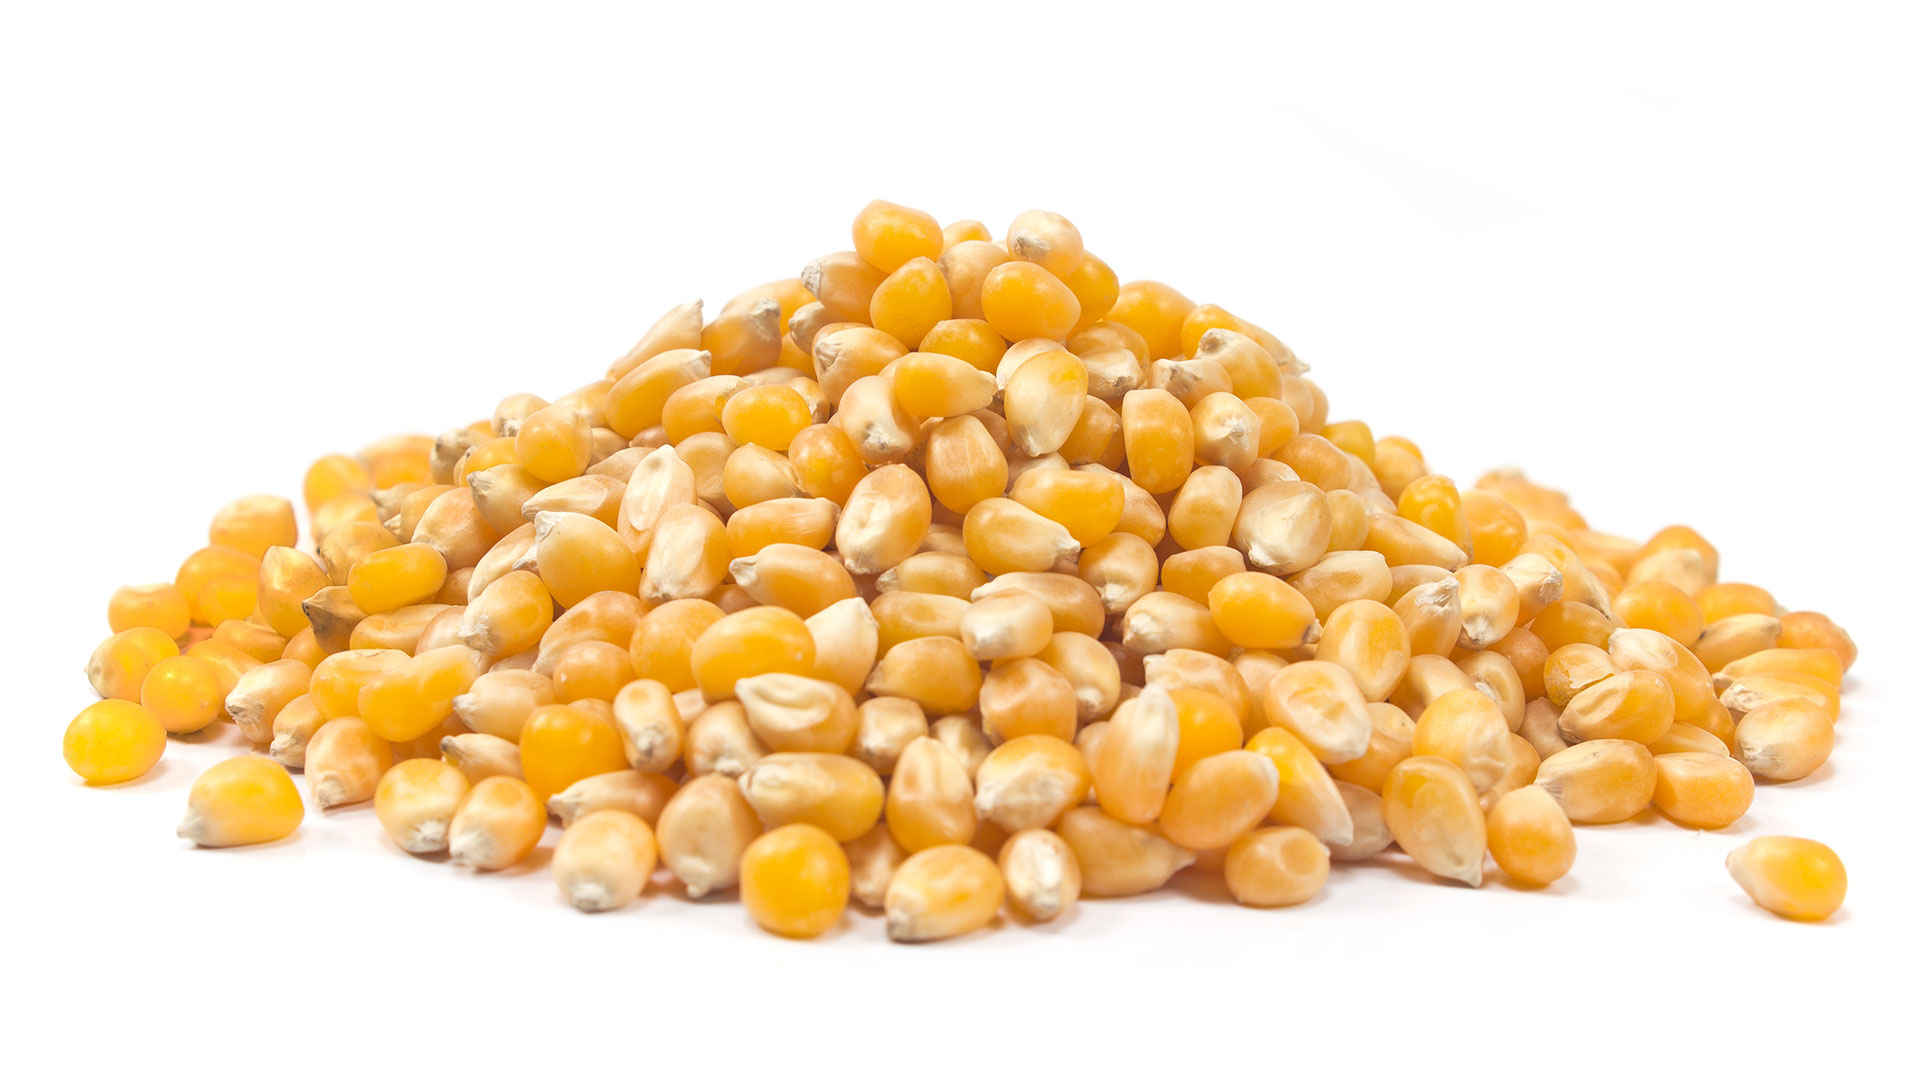 Corn measurement